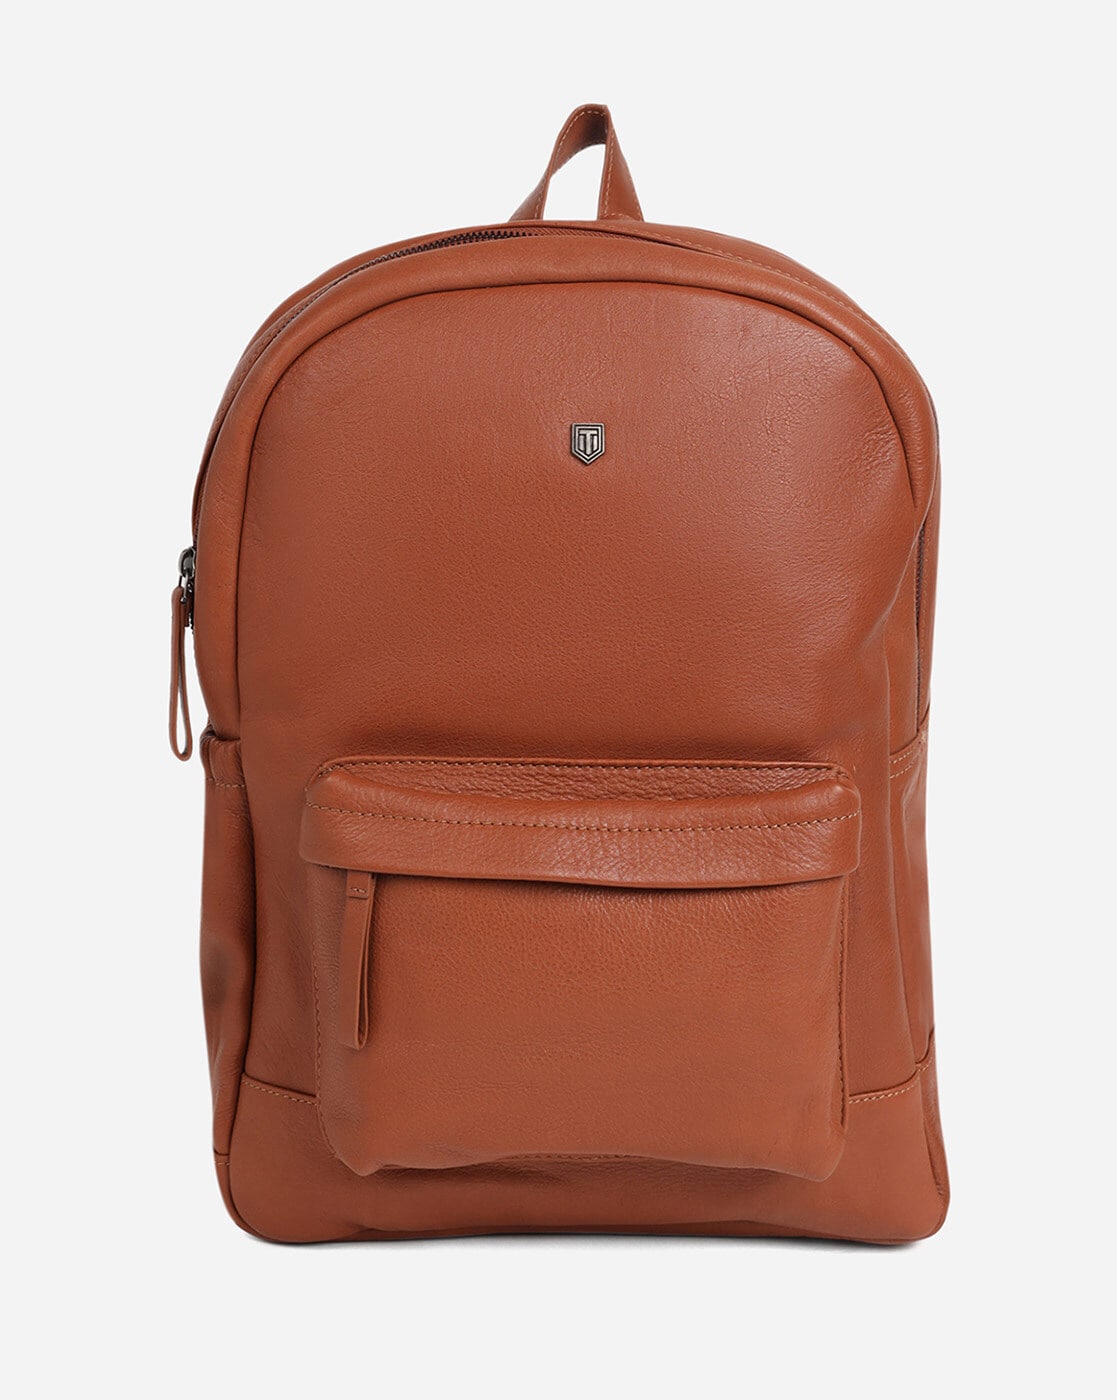 Le Donne Leather U-Zip Mini Backpack LD-030 - Walmart.com